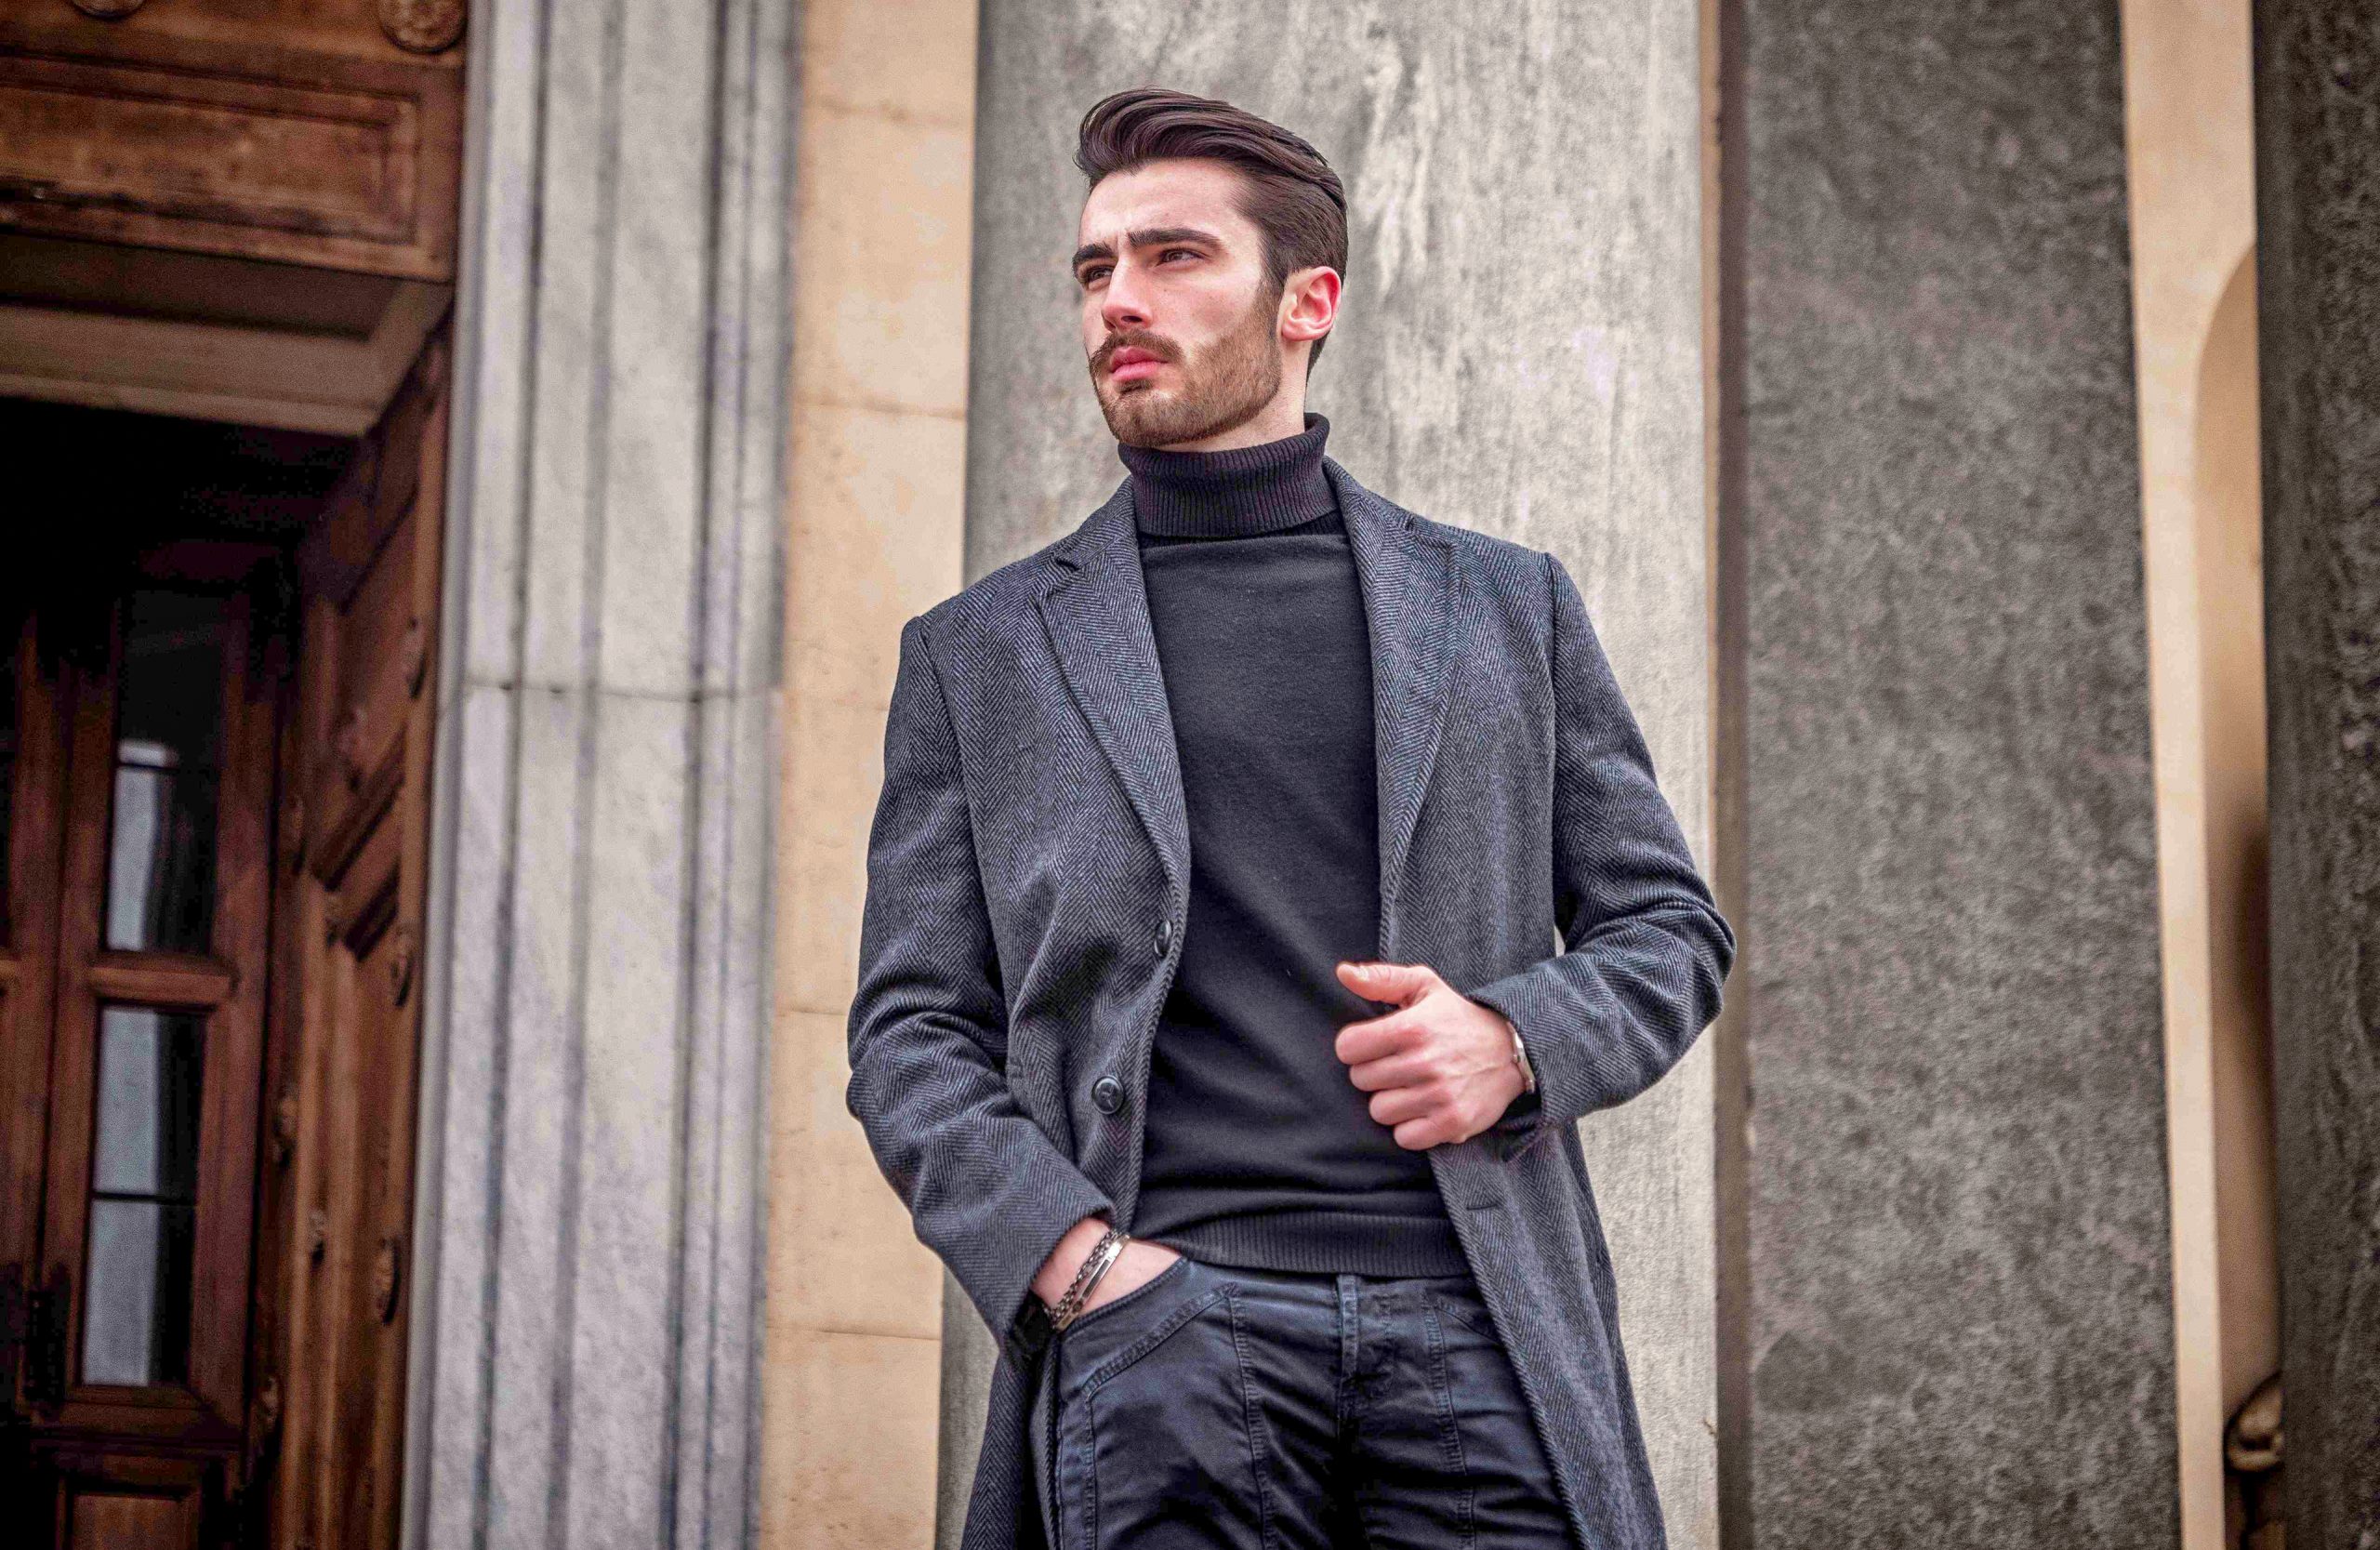 Men's business casual dress code & attire